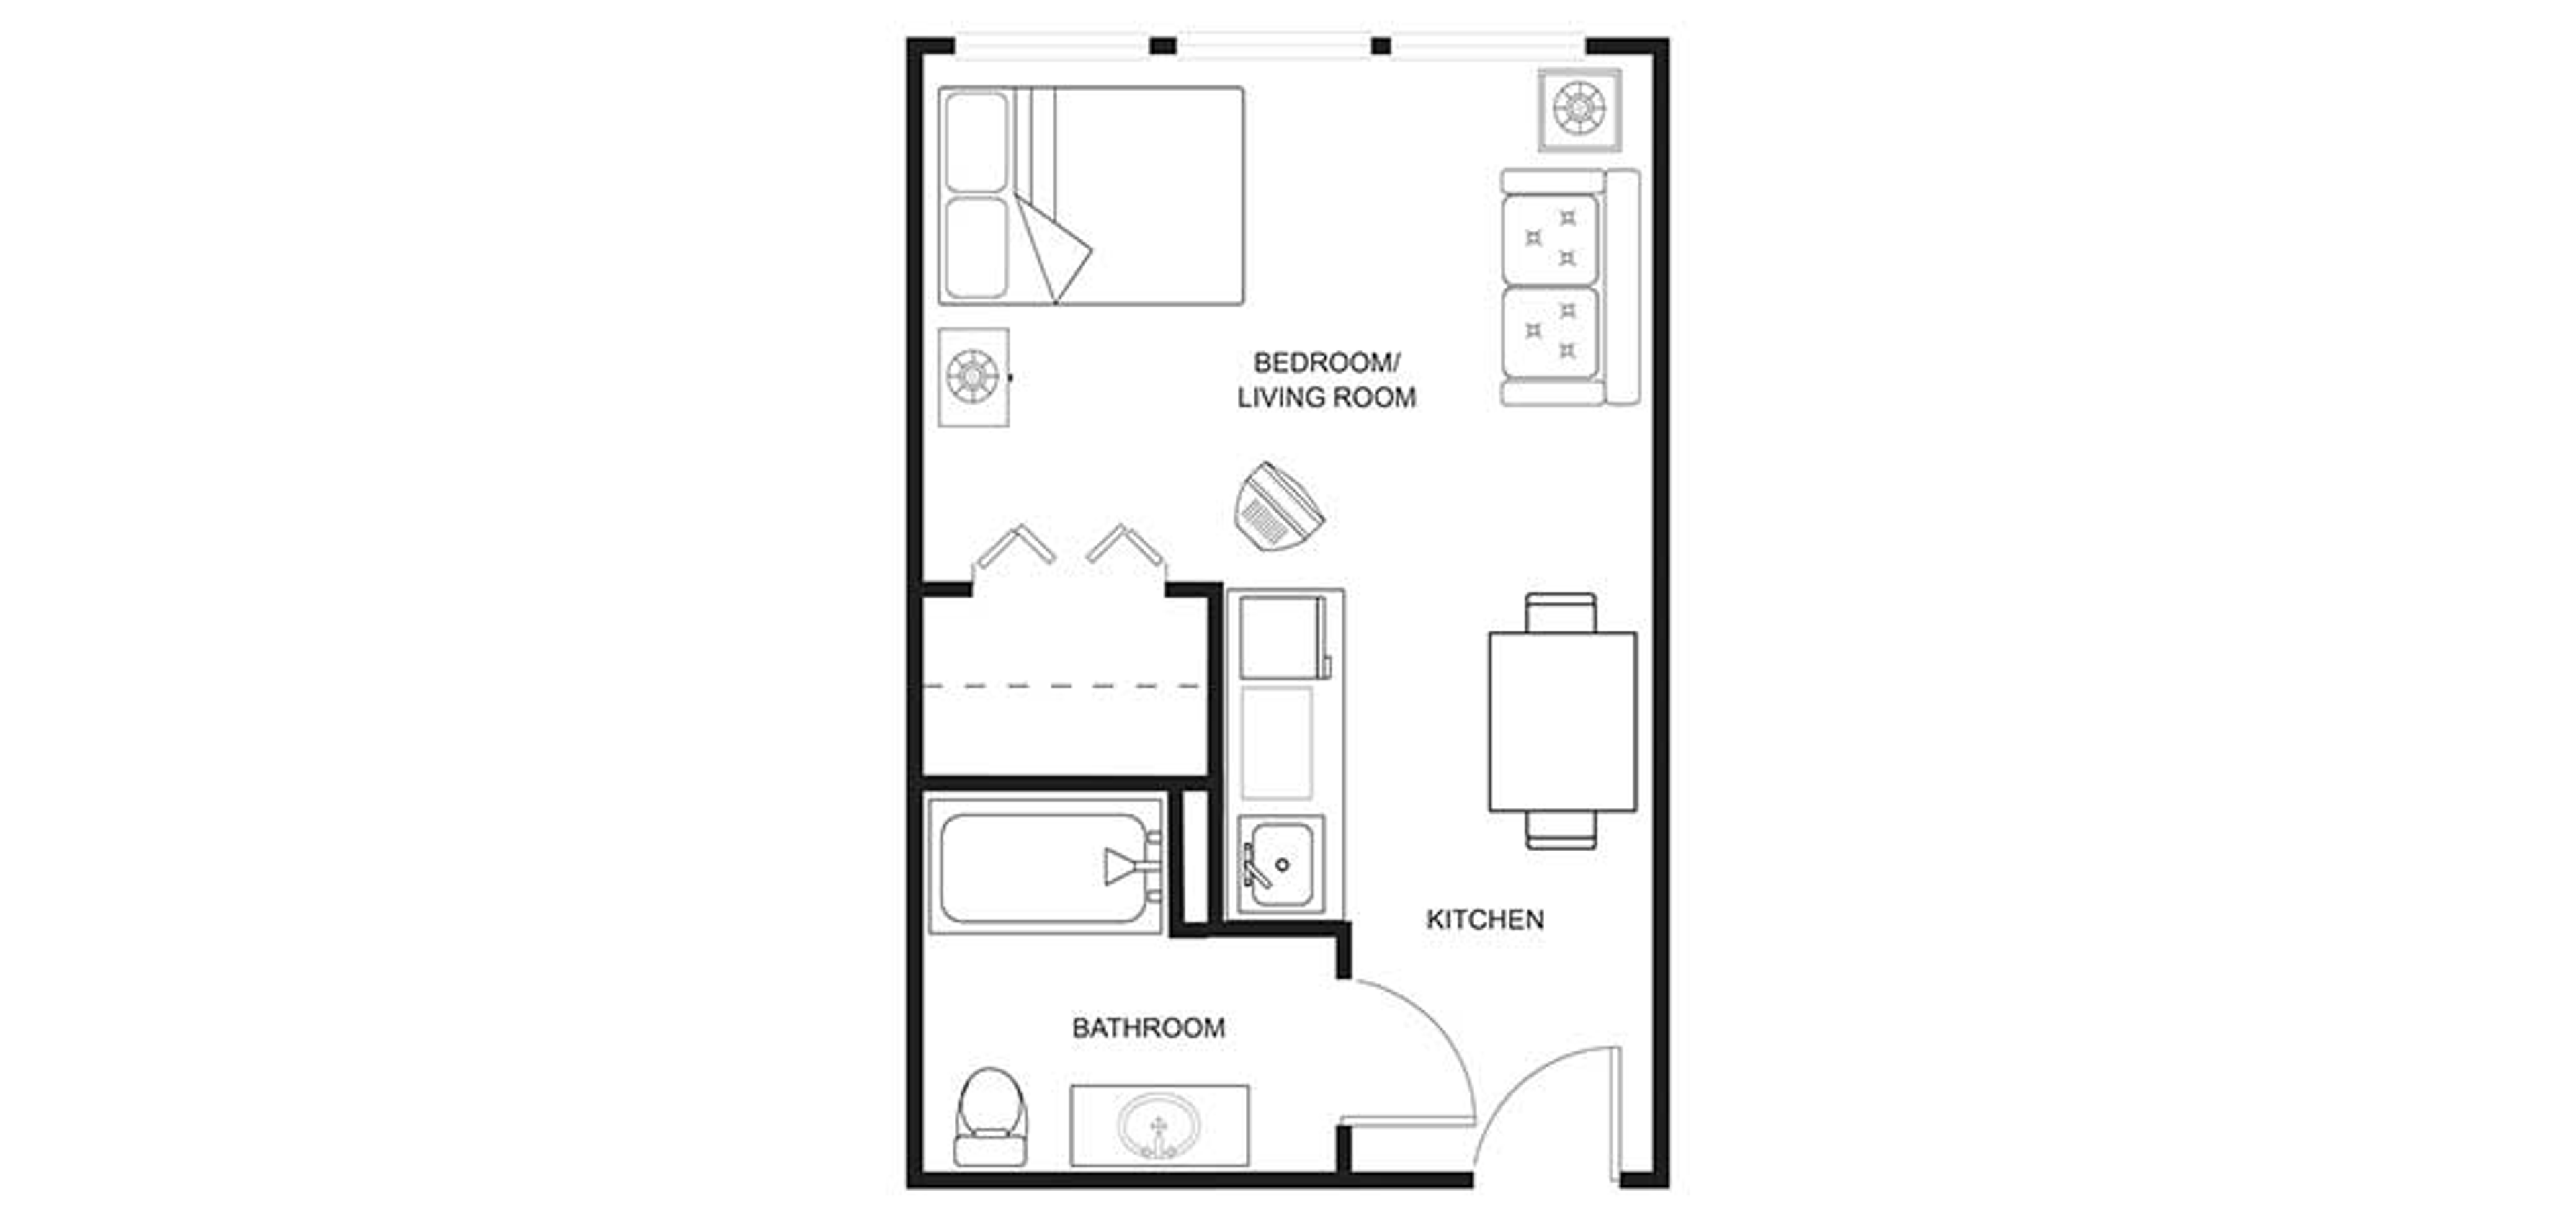 Floorplan - Pheasant Pointe - Private Suite, 350 sq. ft. Memory Care 